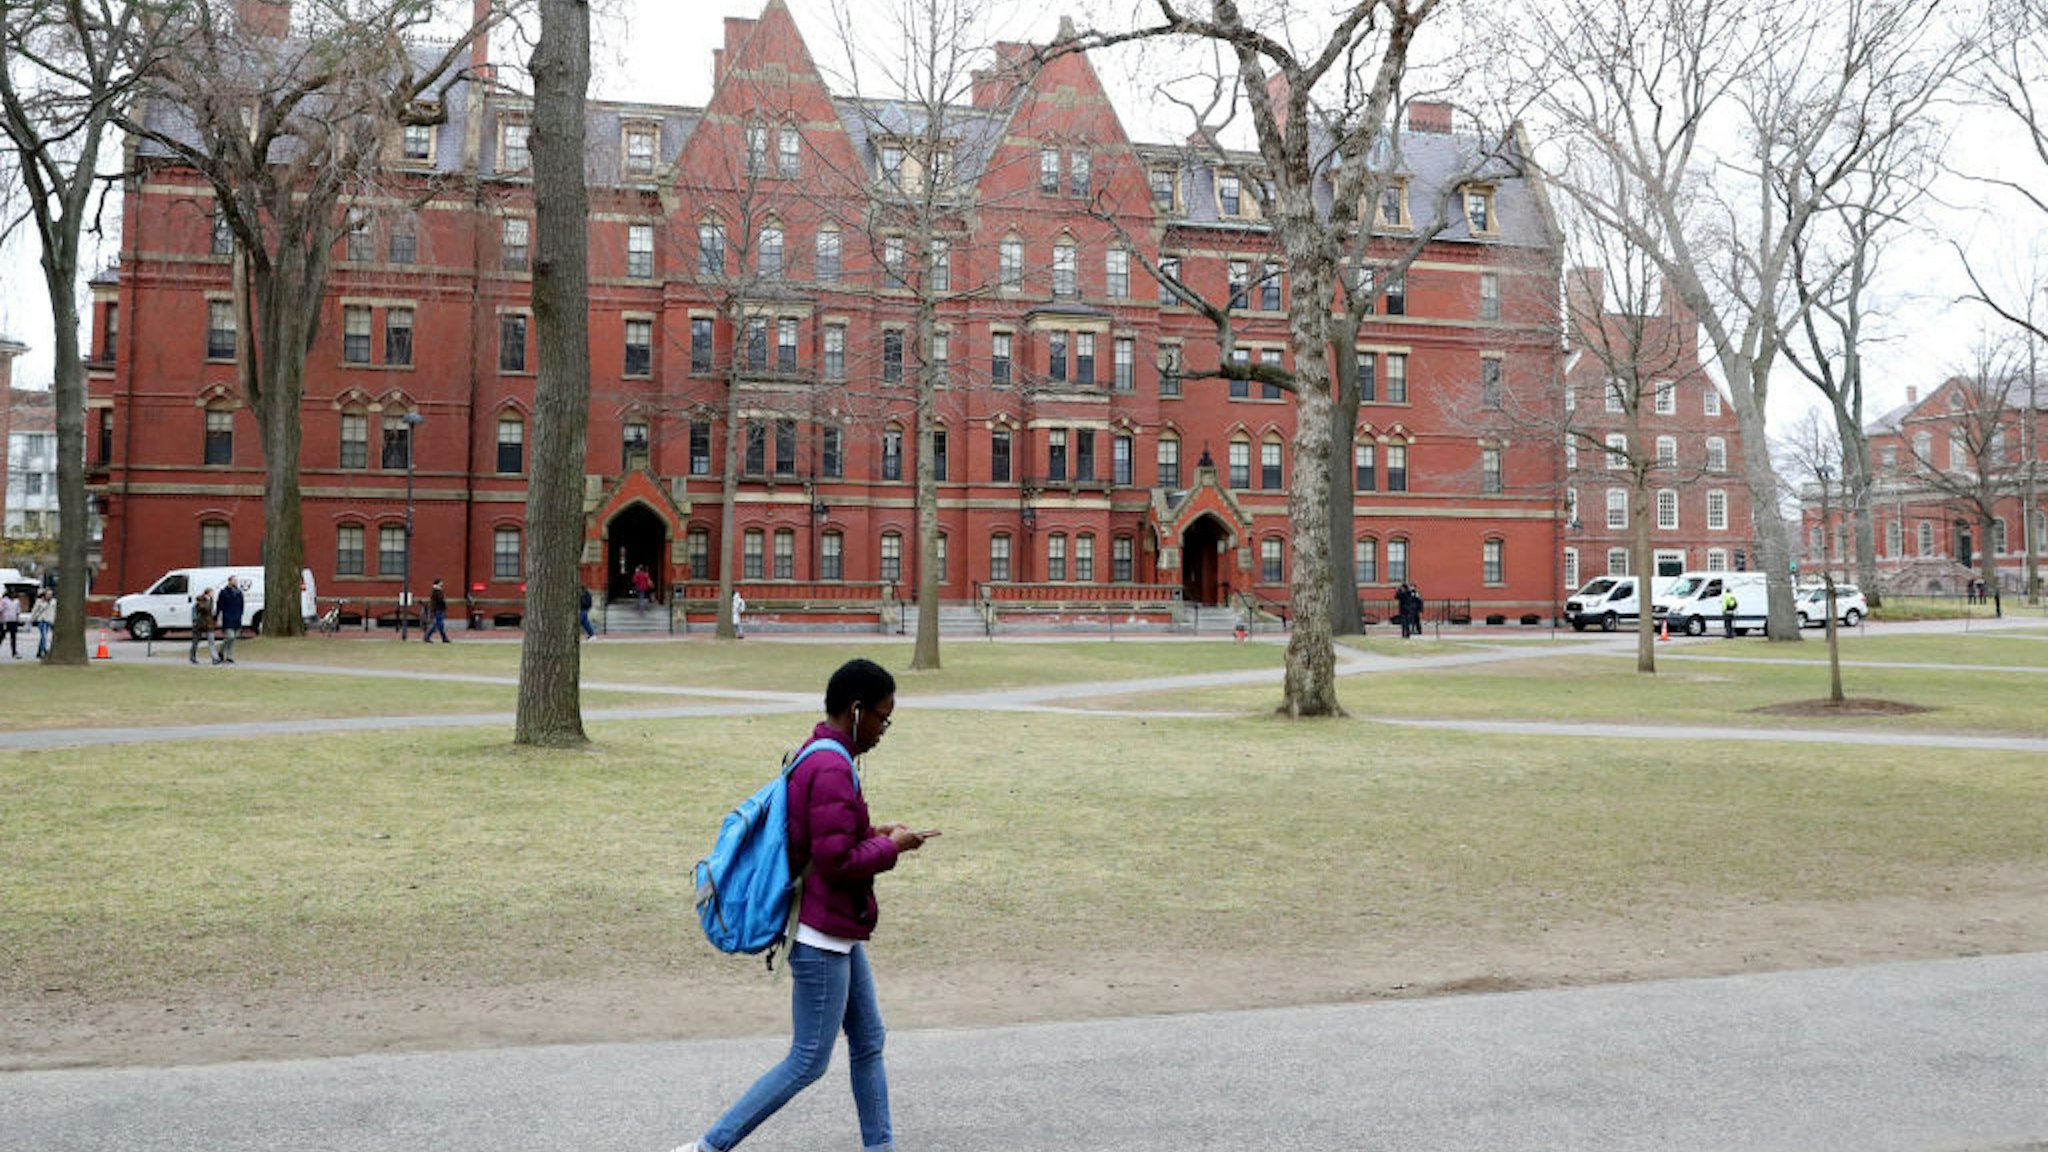 A student walks through Harvard Yard on the campus of Harvard University on March 12, 2020 in Cambridge, Massachusetts.